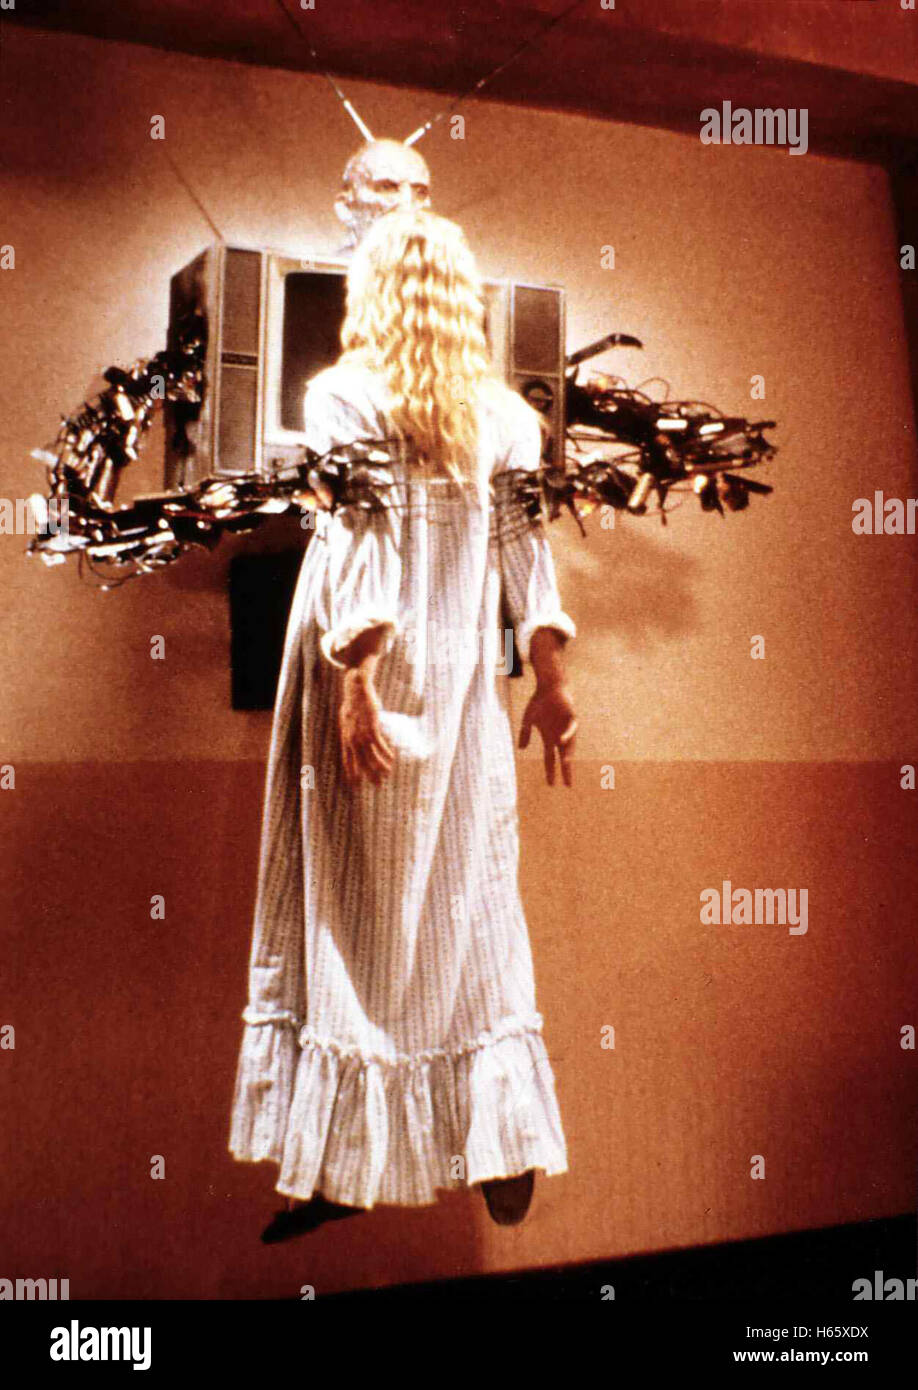 Cauchemar - Mörderische Träume,USA 1984 aka. A Nightmare on Elm Street, Directeur : Wes Craven, acteurs/Stars : Heather M. Langenkamp, Johnny Depp, Robert Englund Banque D'Images